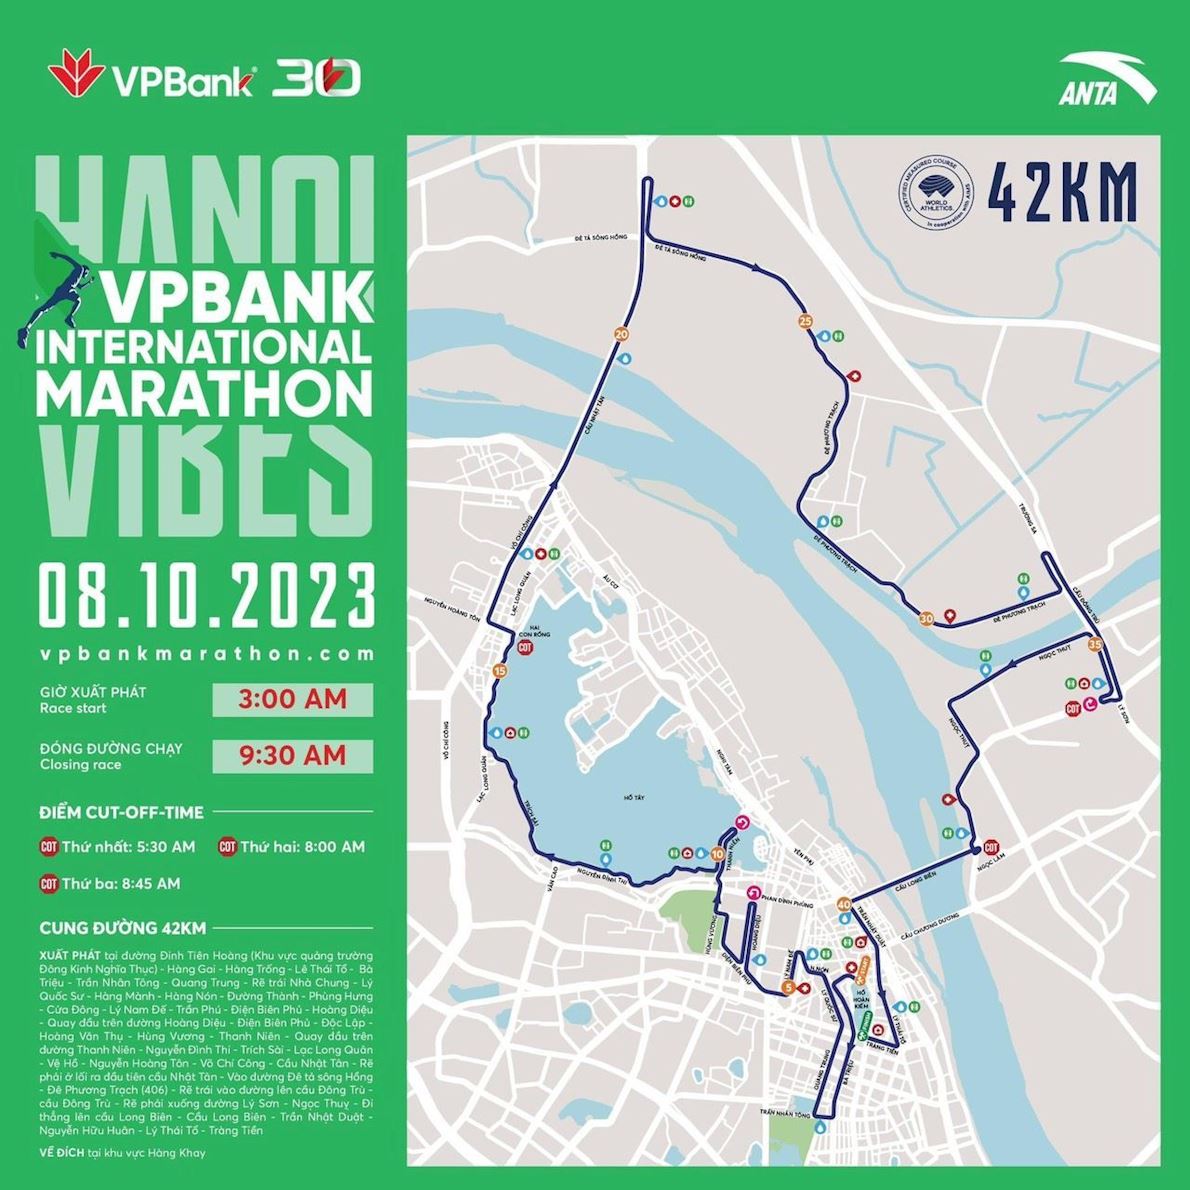 VPBank Hanoi International Marathon Route Map